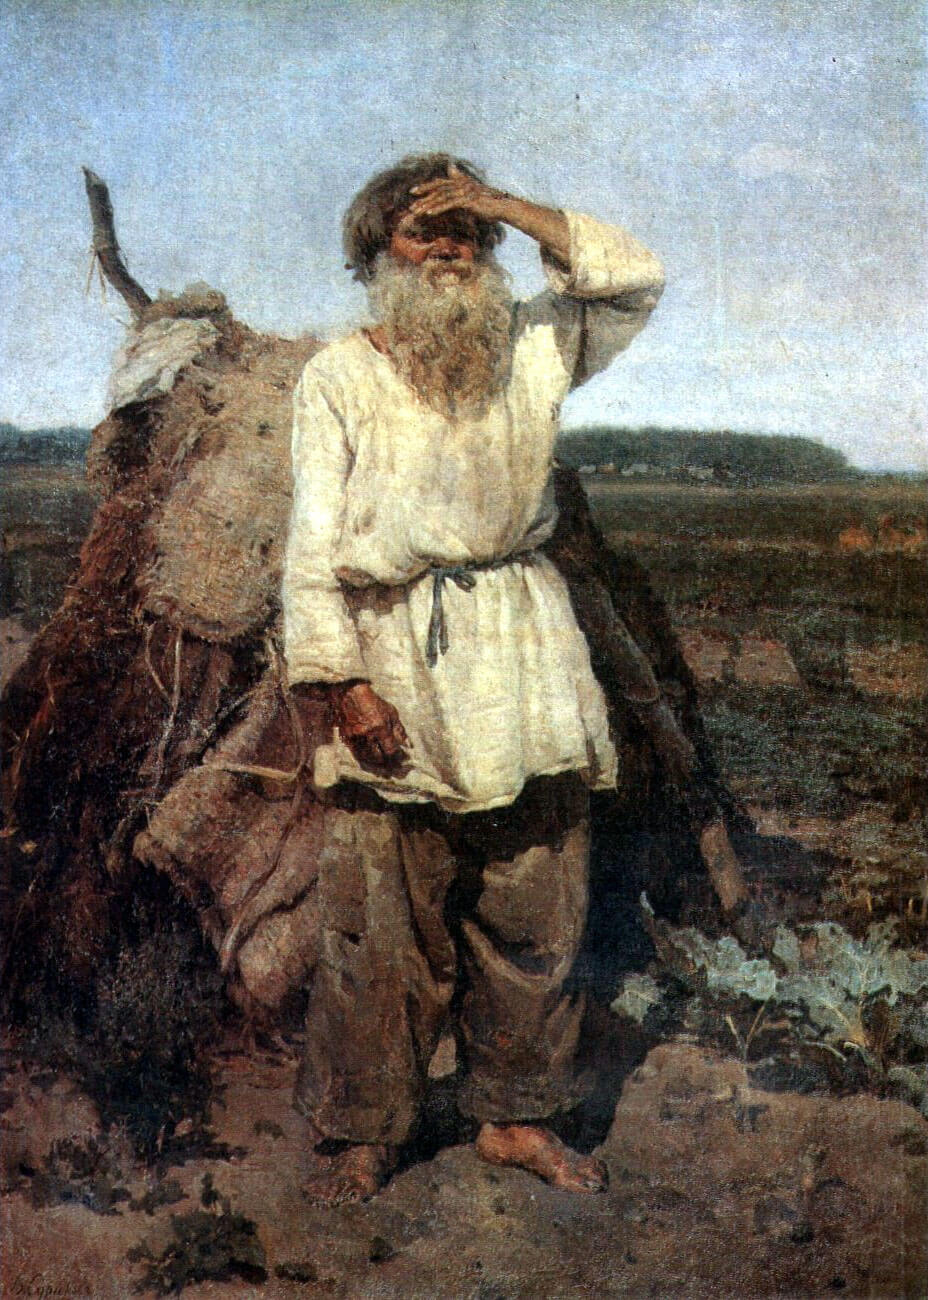 Description of the painting Vasily Surikov "The Old Gardener"